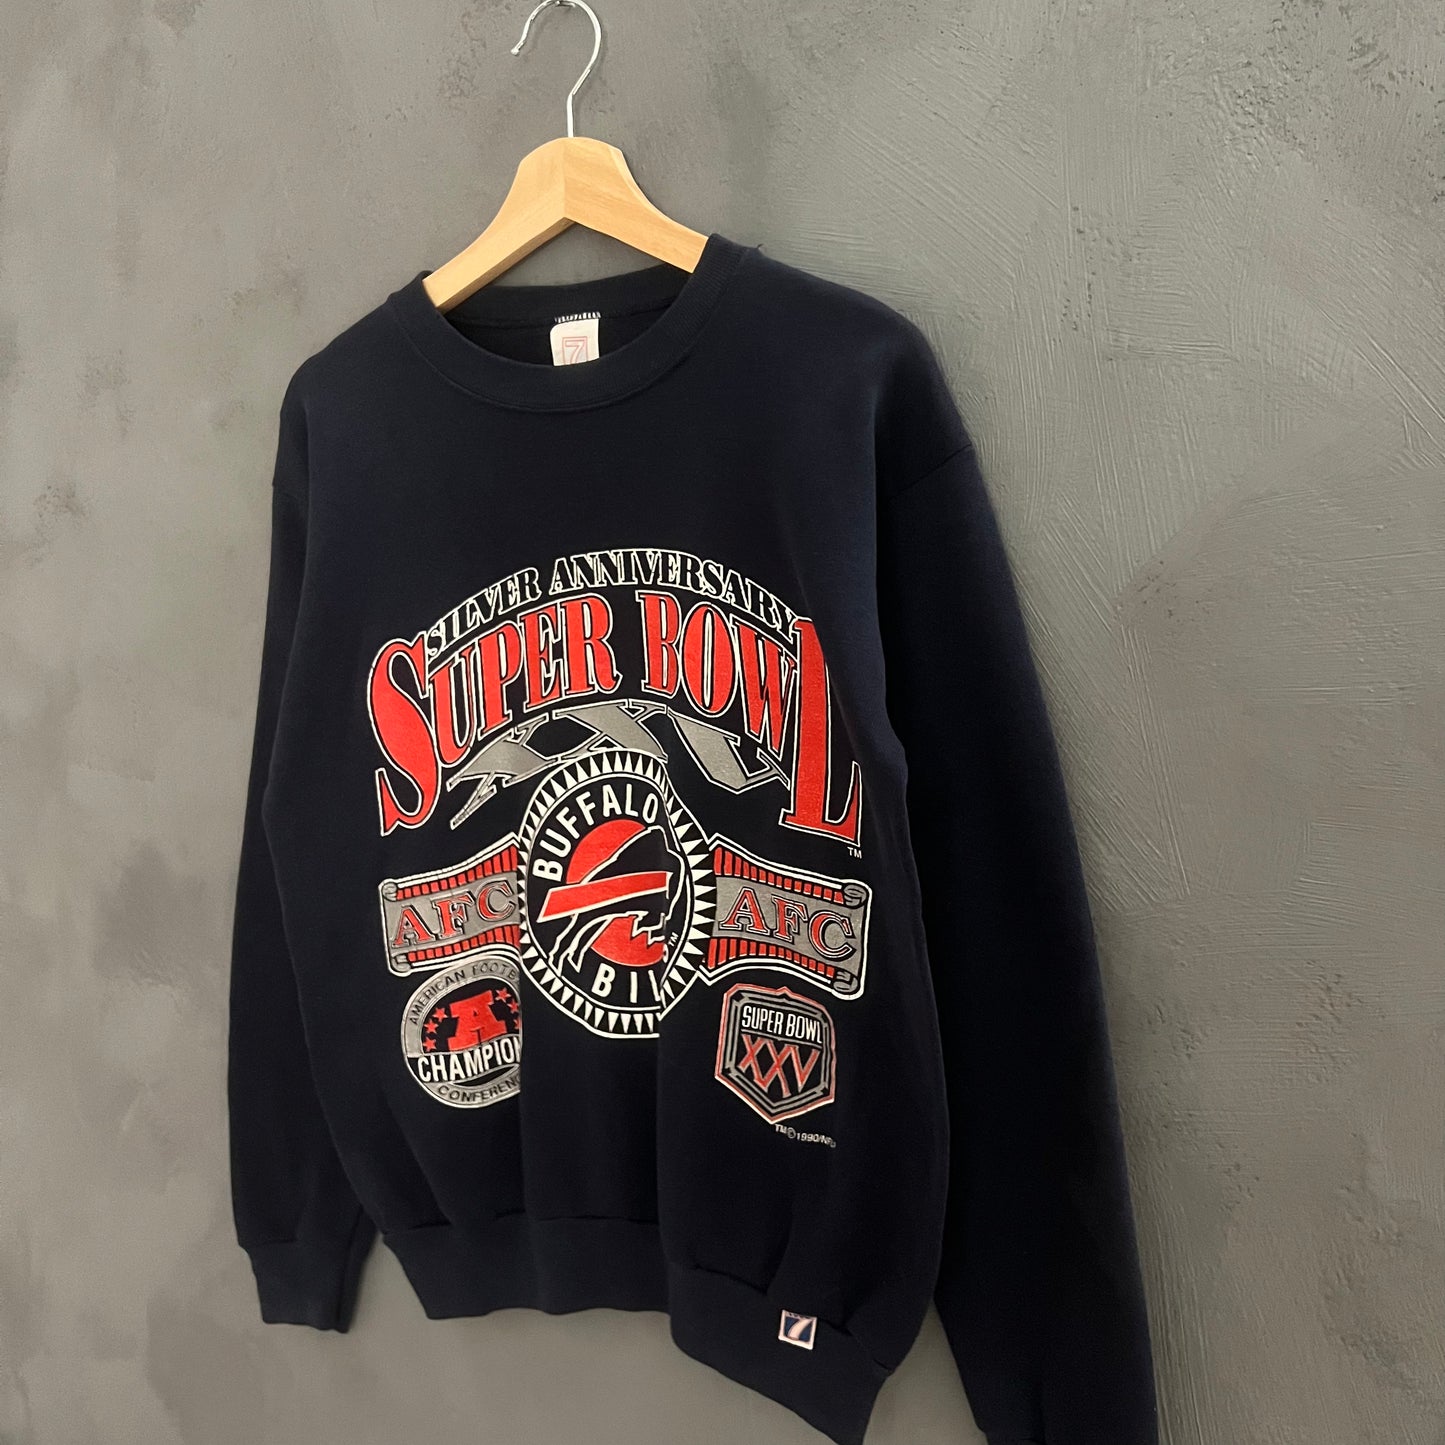 1990 Buffalo Superbowl Sweatshirt (S)